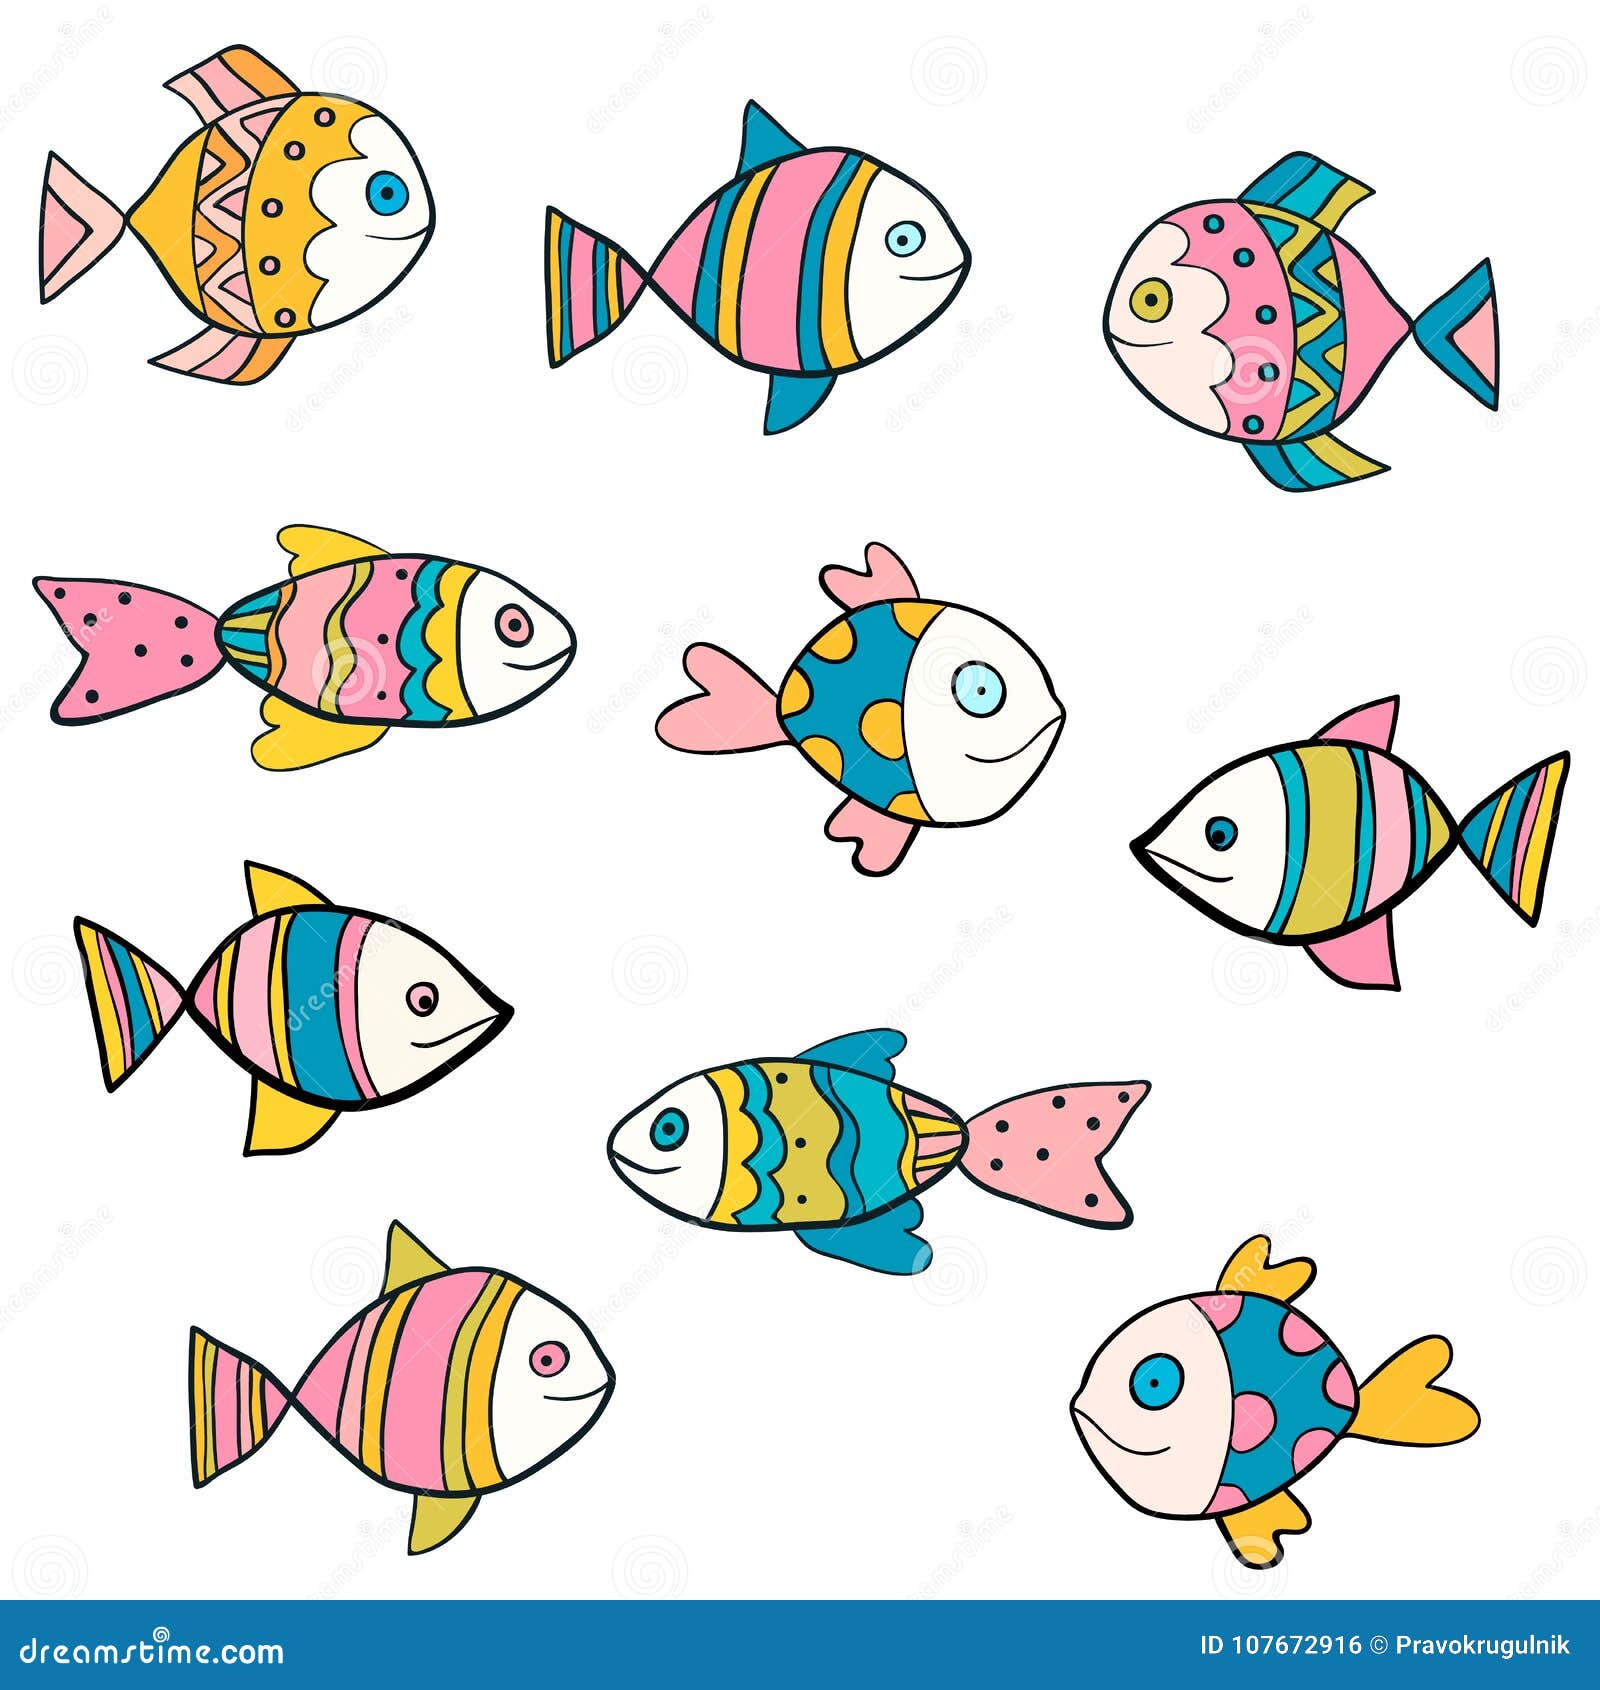 Cute, Fun and Colorful Vector Fish Drawings Stock Vector ...